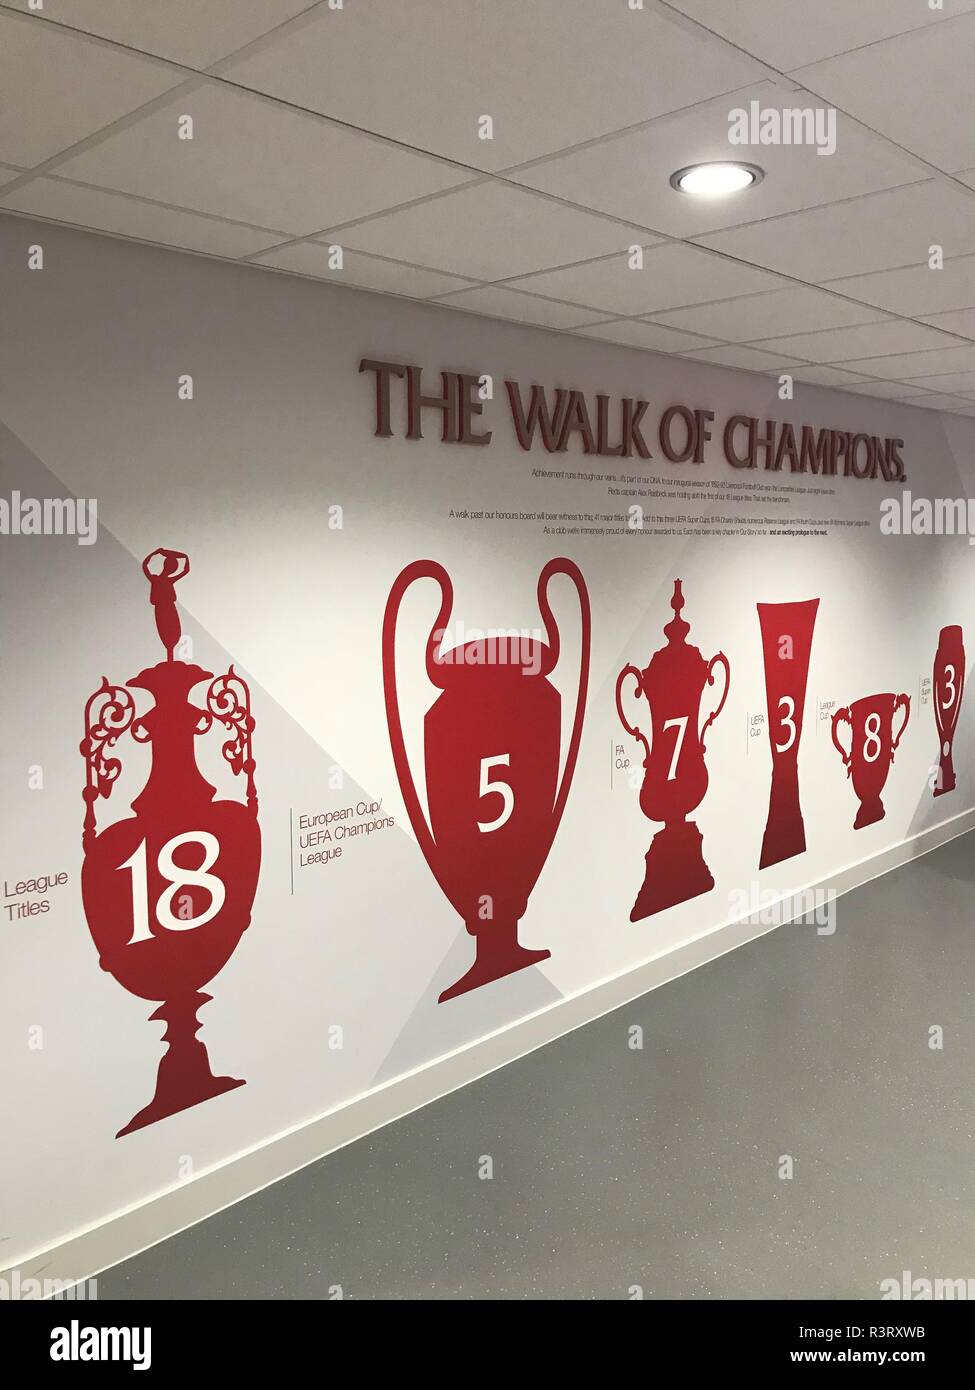 Walk of champions in Liverpool, Anfield Stadium Stock Photo - Alamy